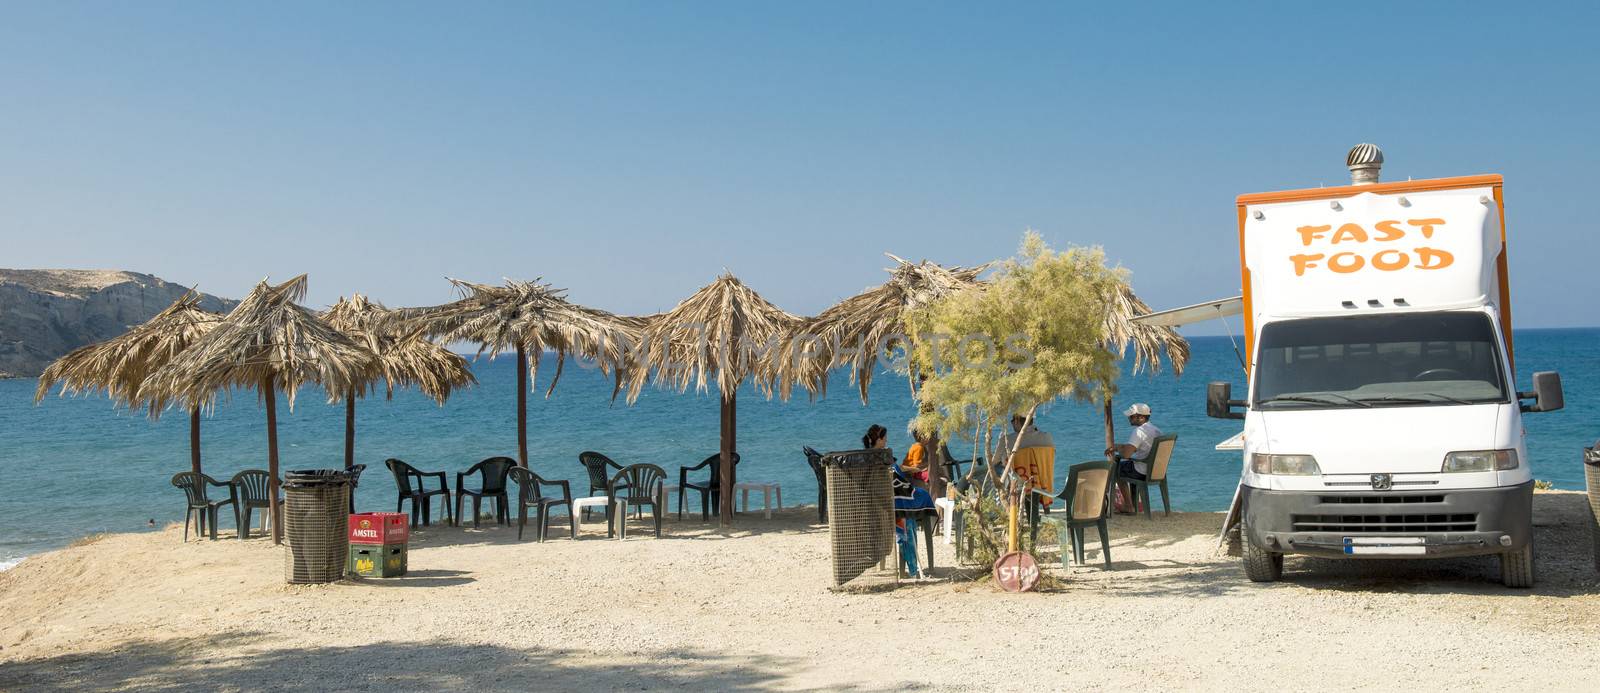 Fast food on the beach of Matala in Crete, Greece.